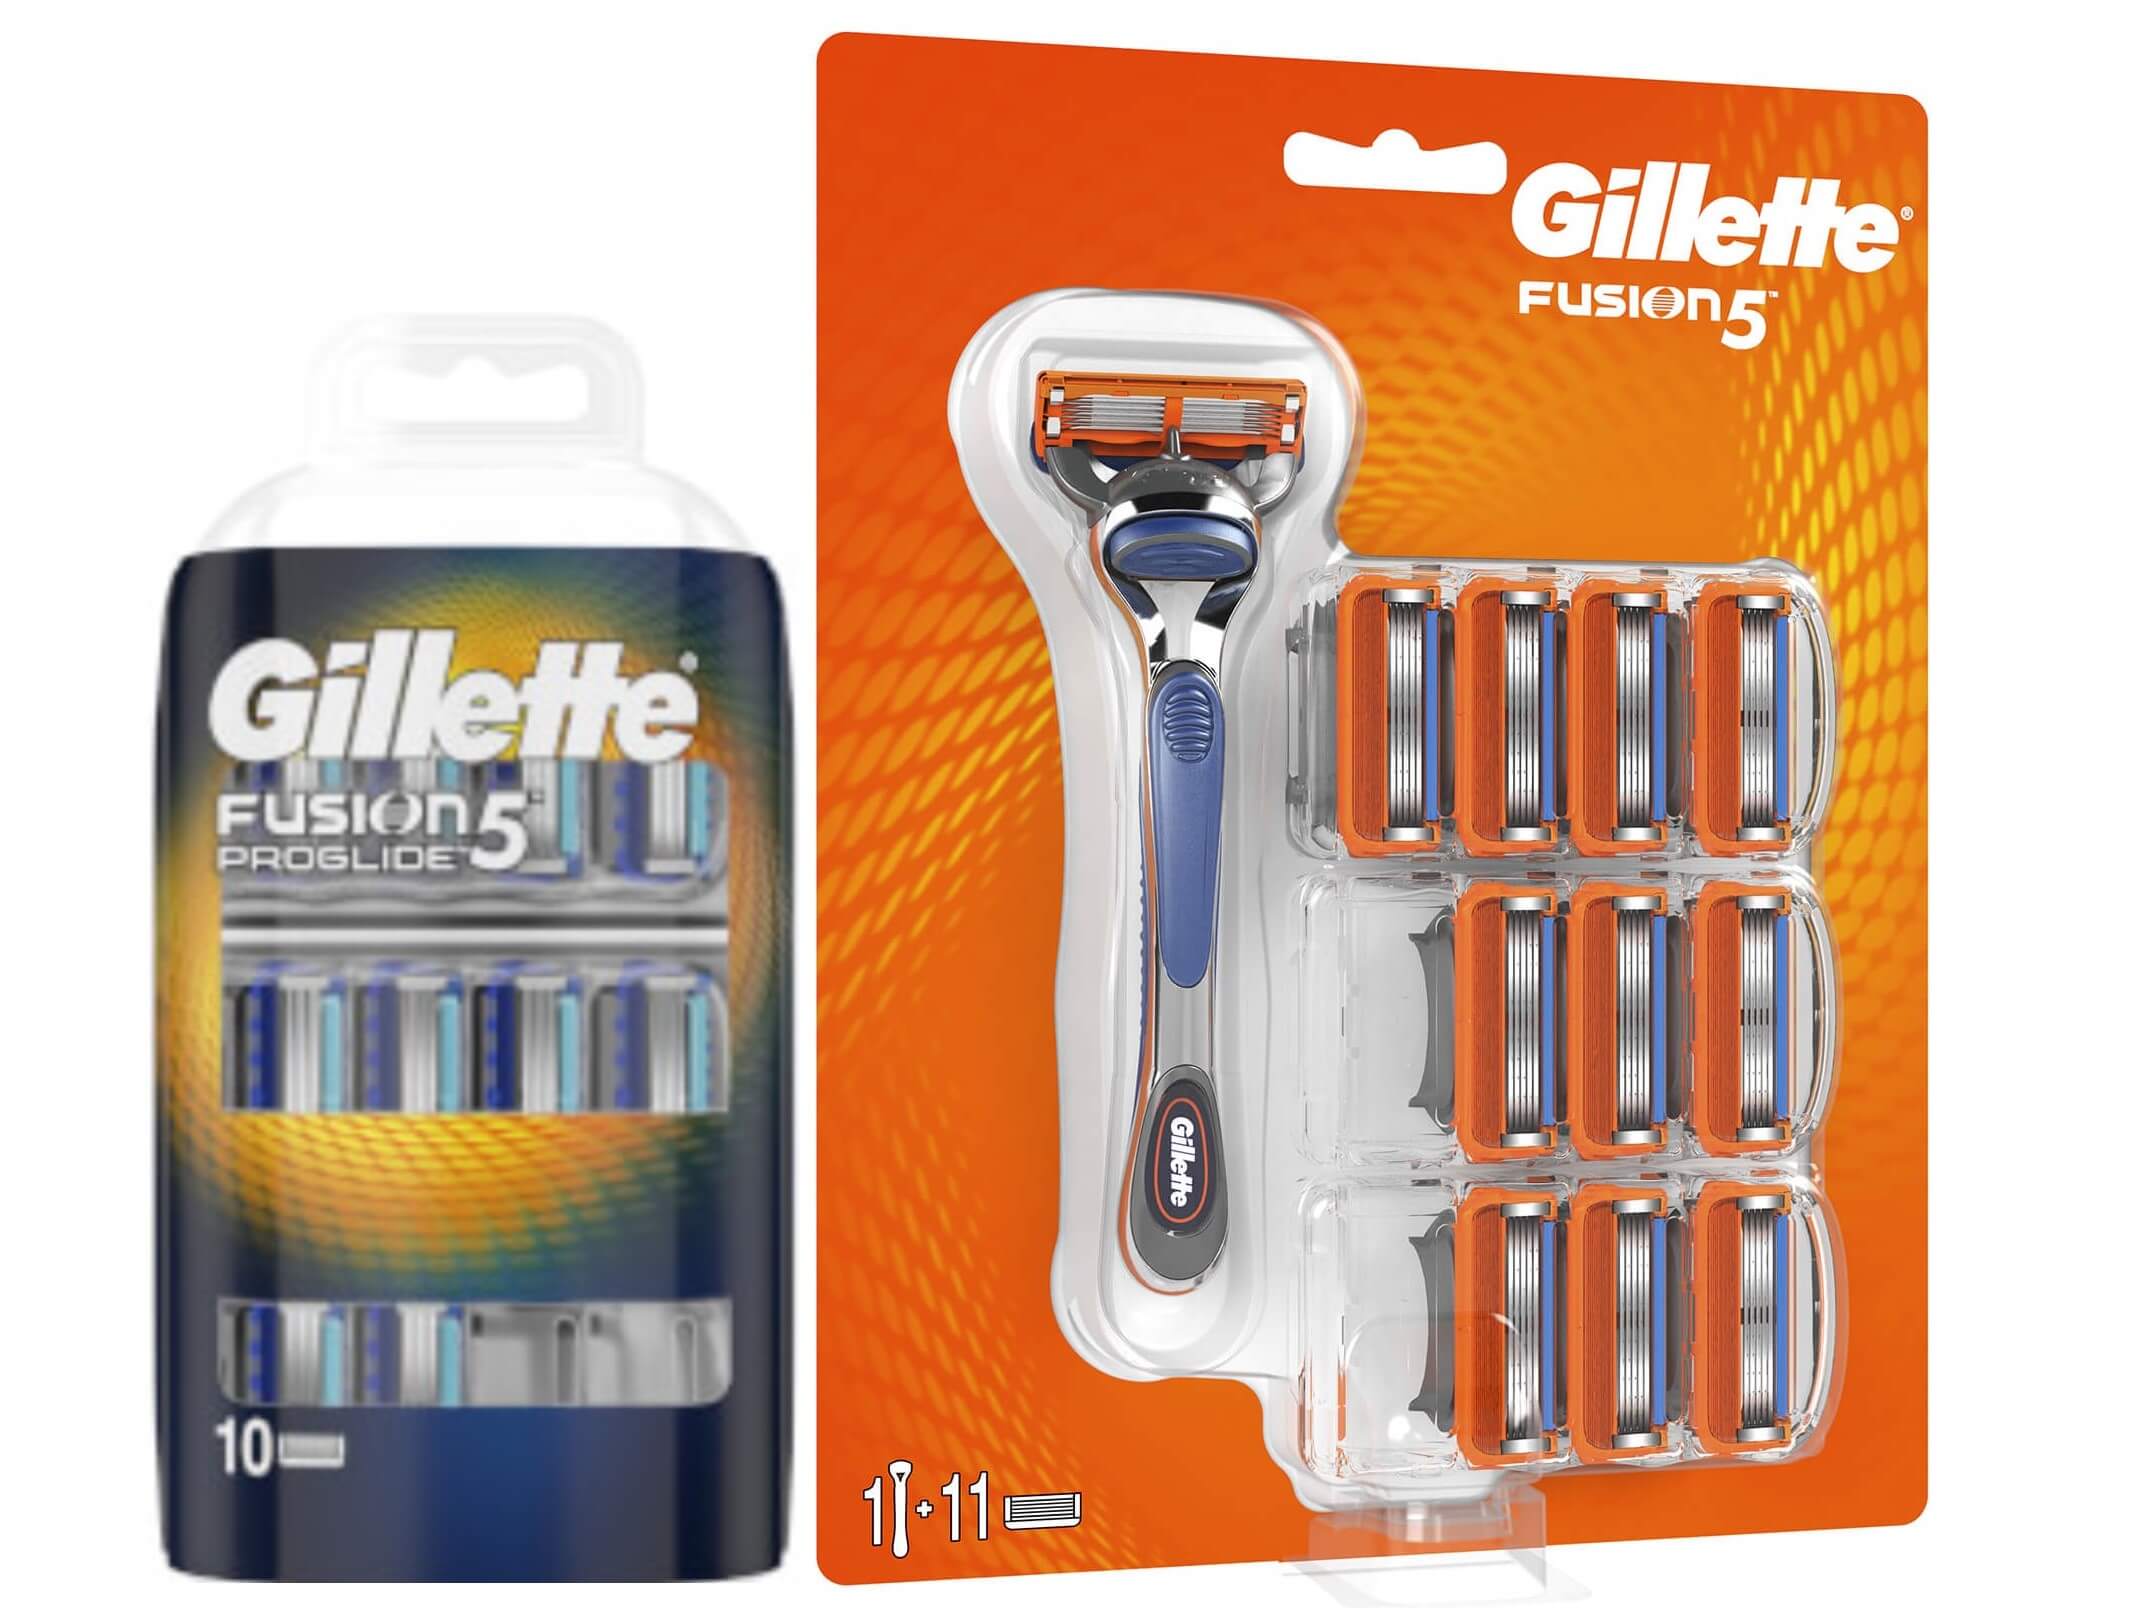 gillette-razor-offers-gillette-uk